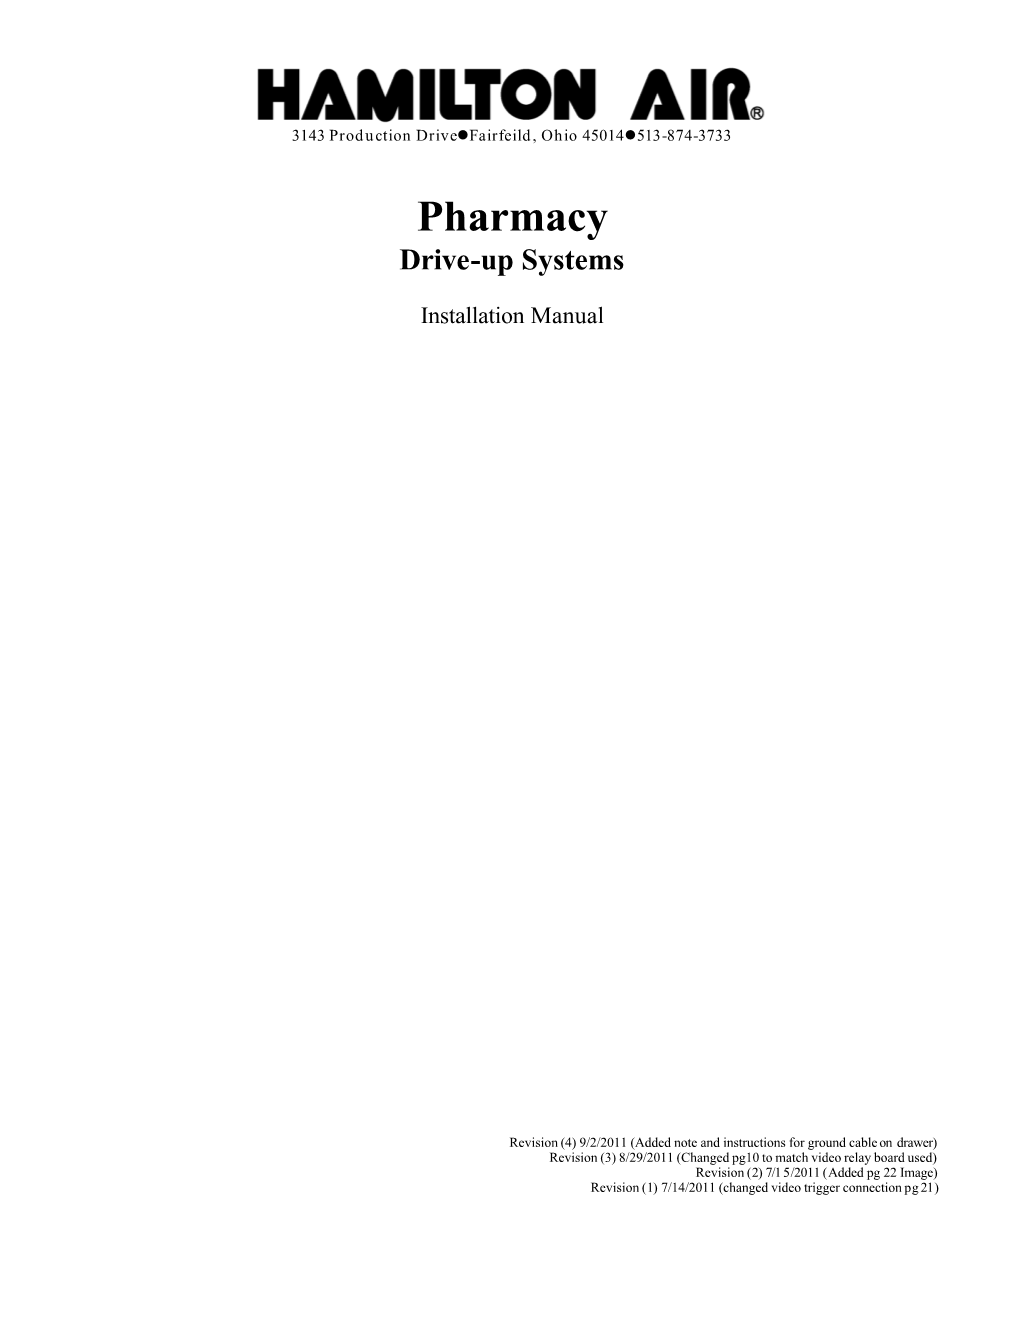 Pharmacy Drive-Up Installation Manual Rev 4